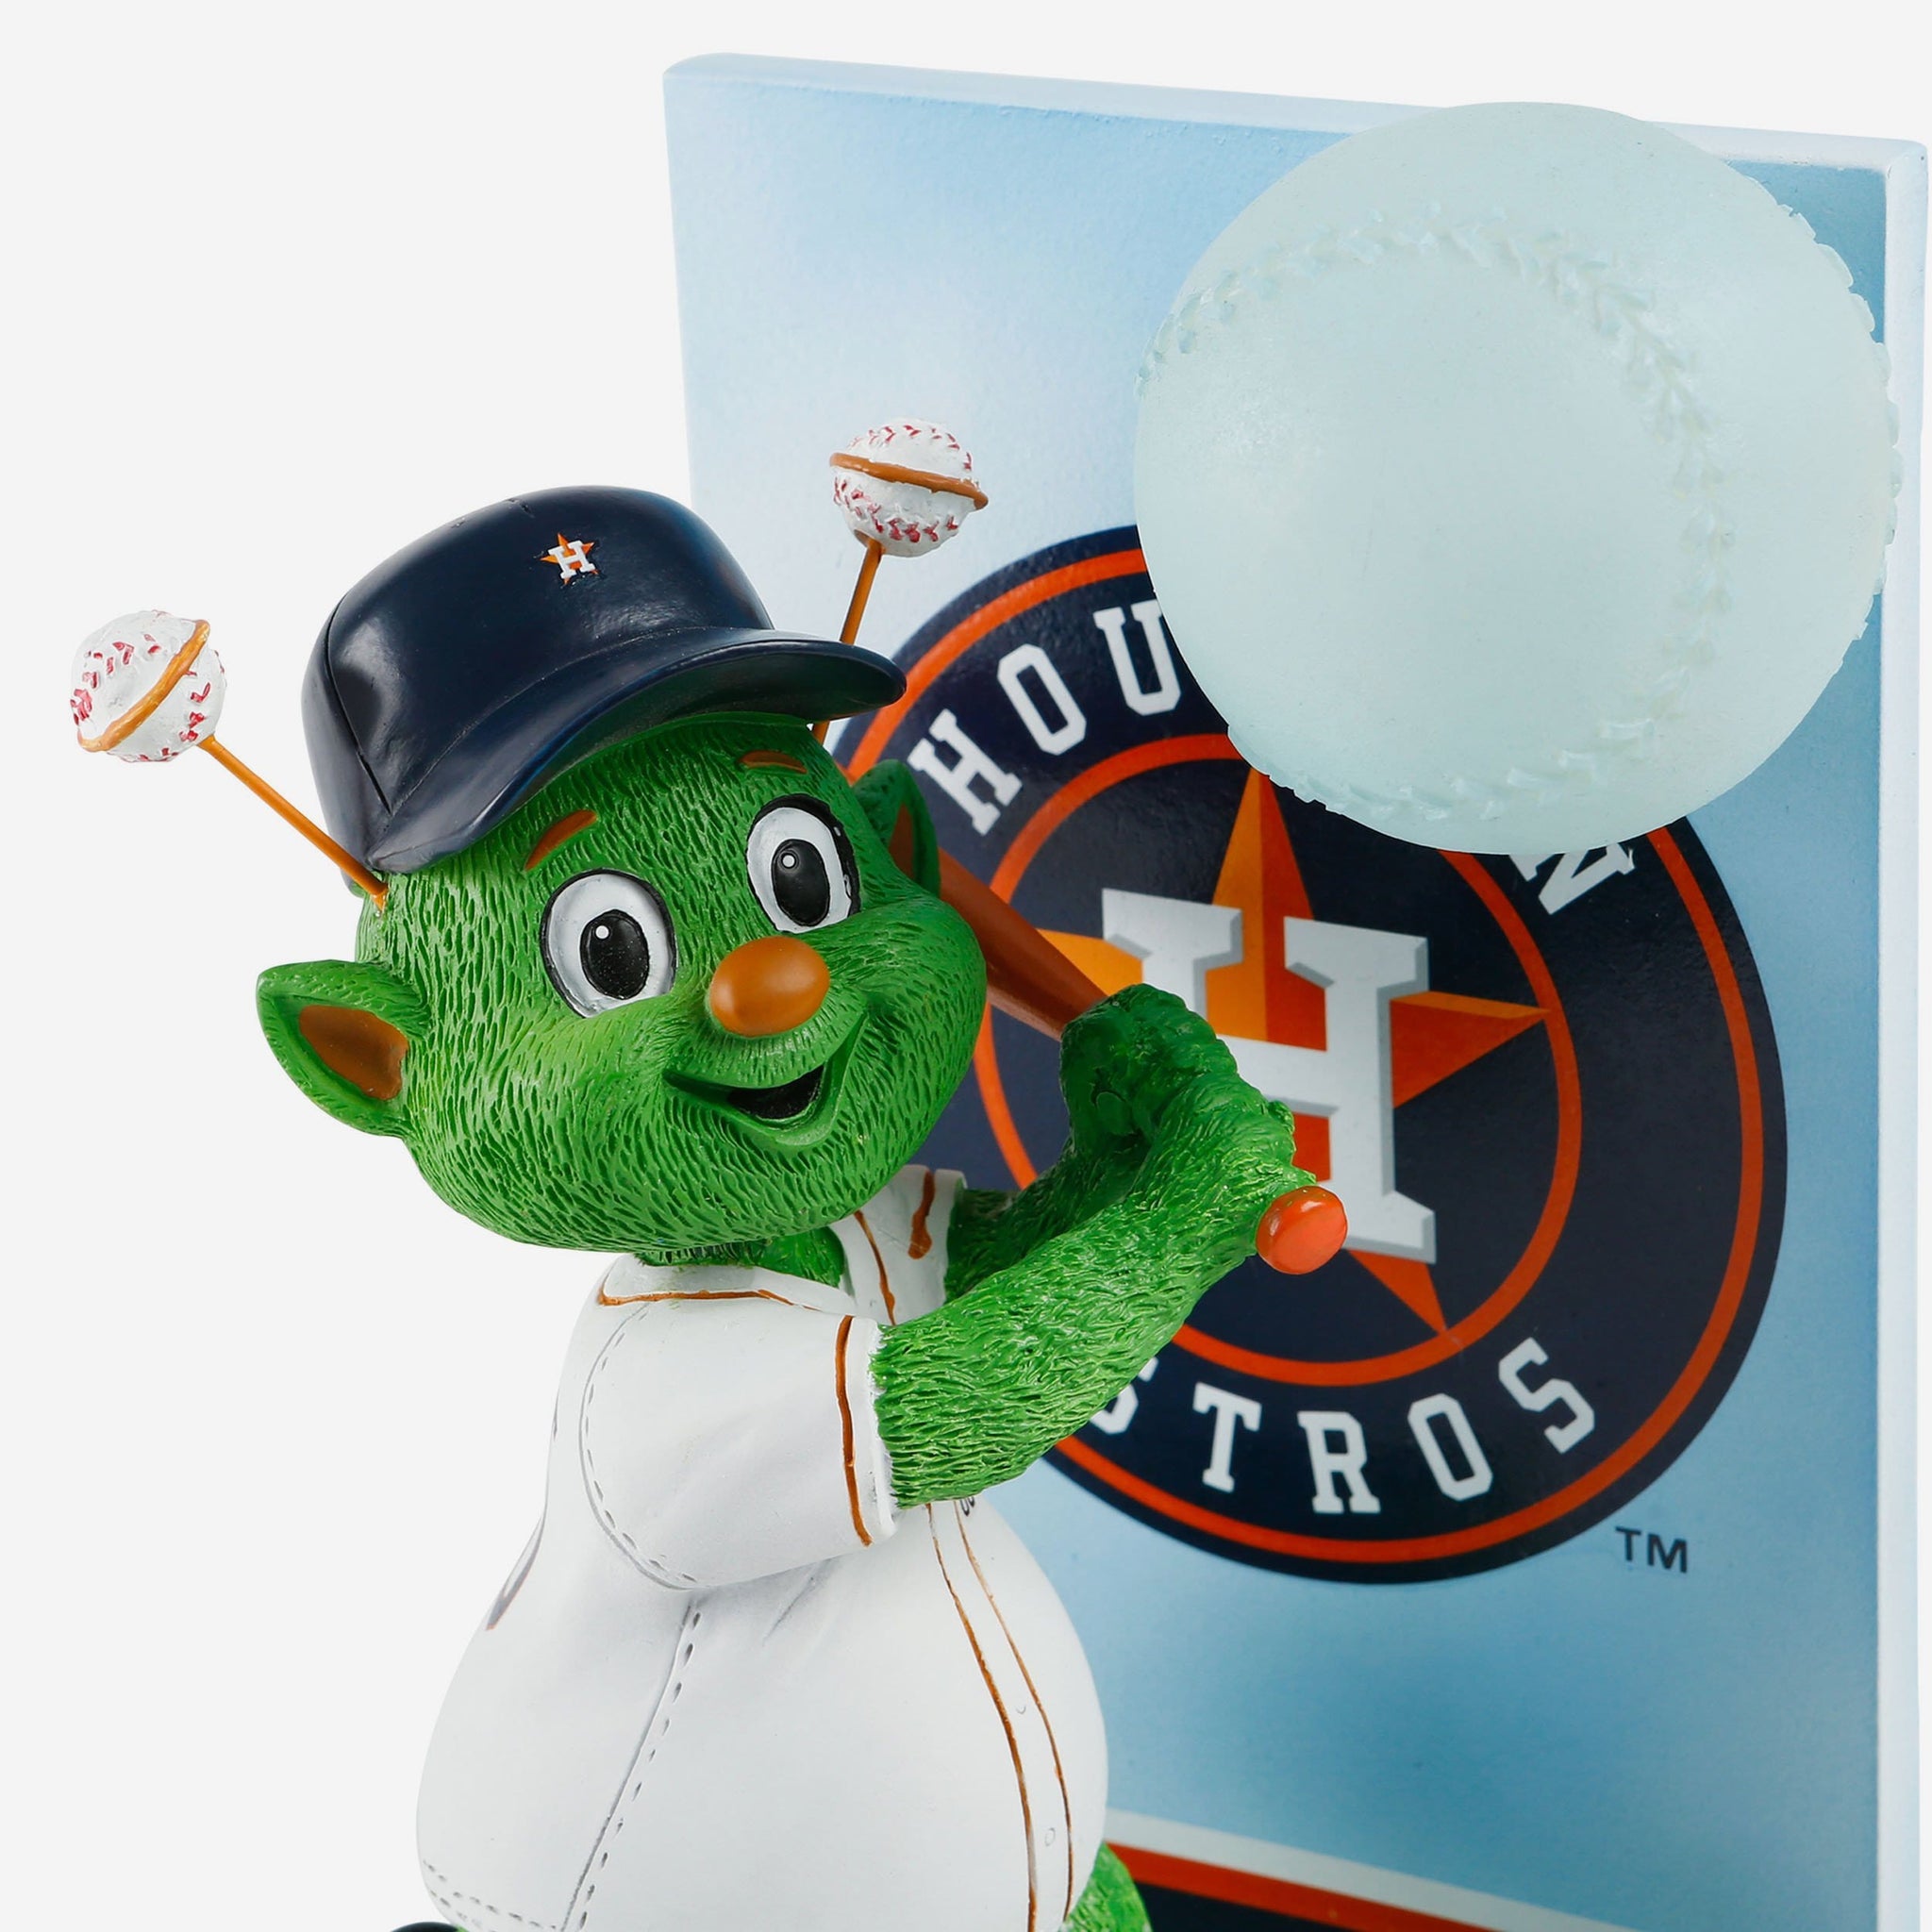 Houston Astros Orbit Spectacular Mascot Bobblehead FOCO